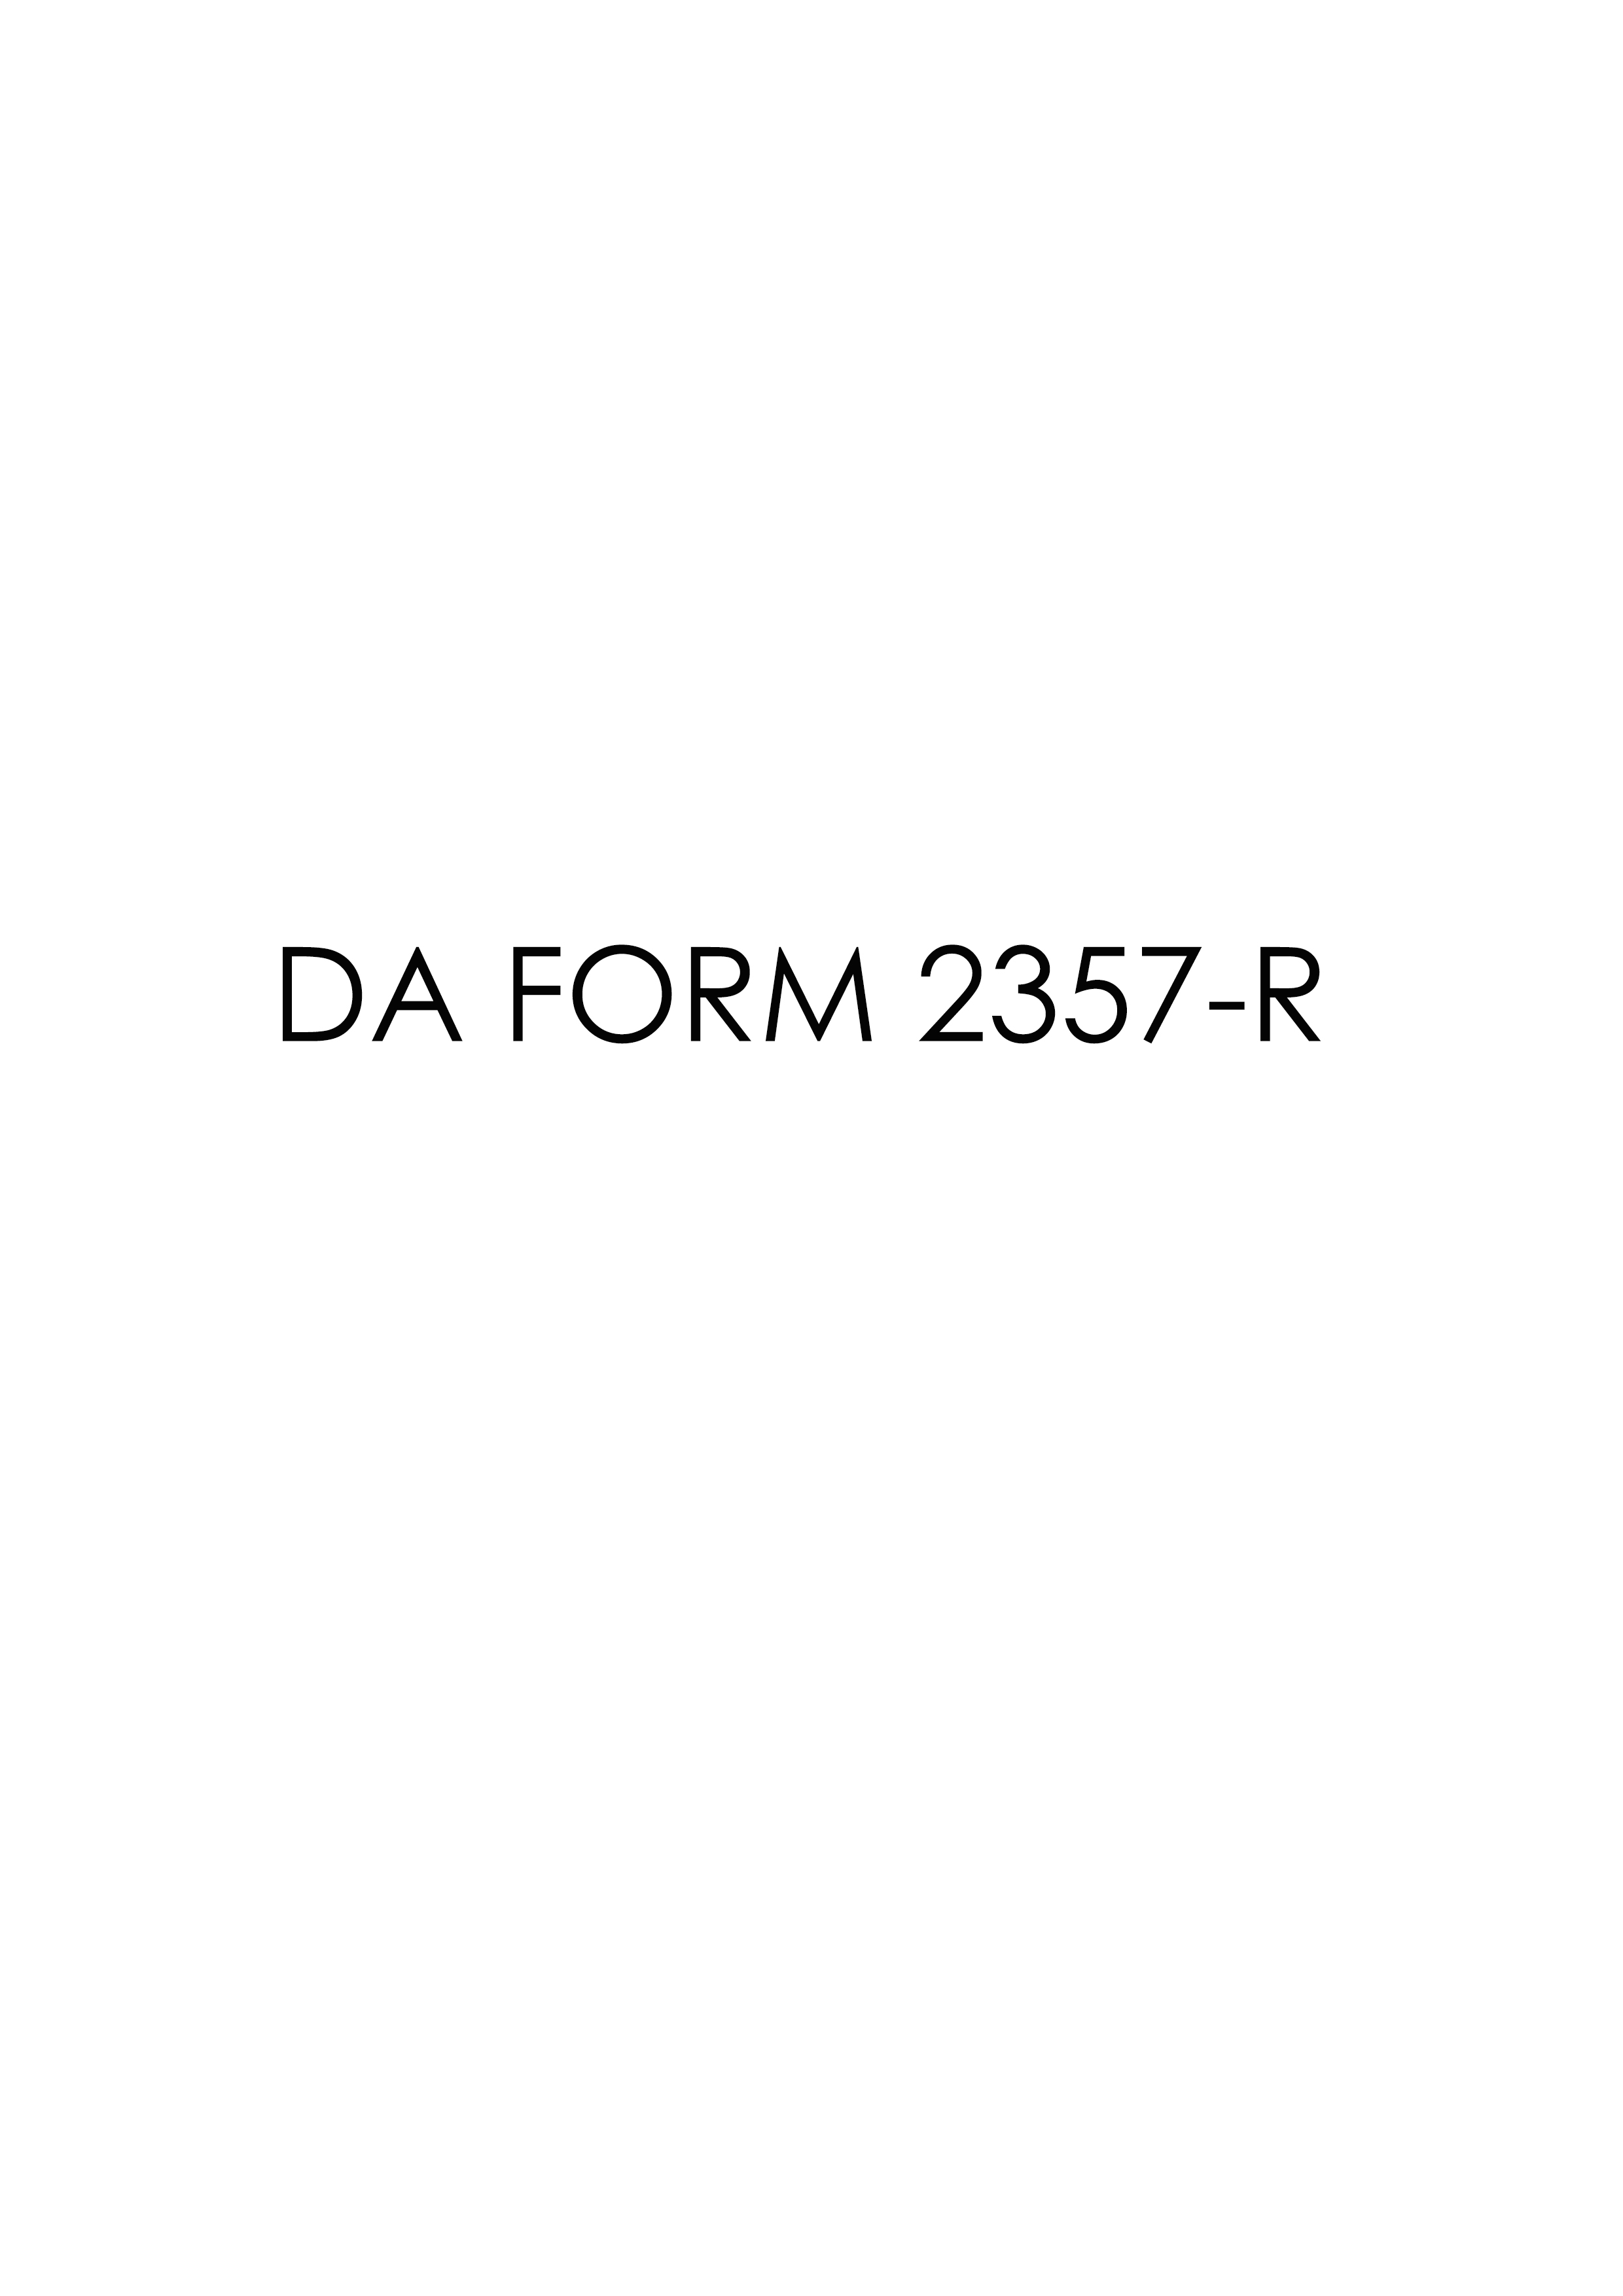 Download da 2357-R Form